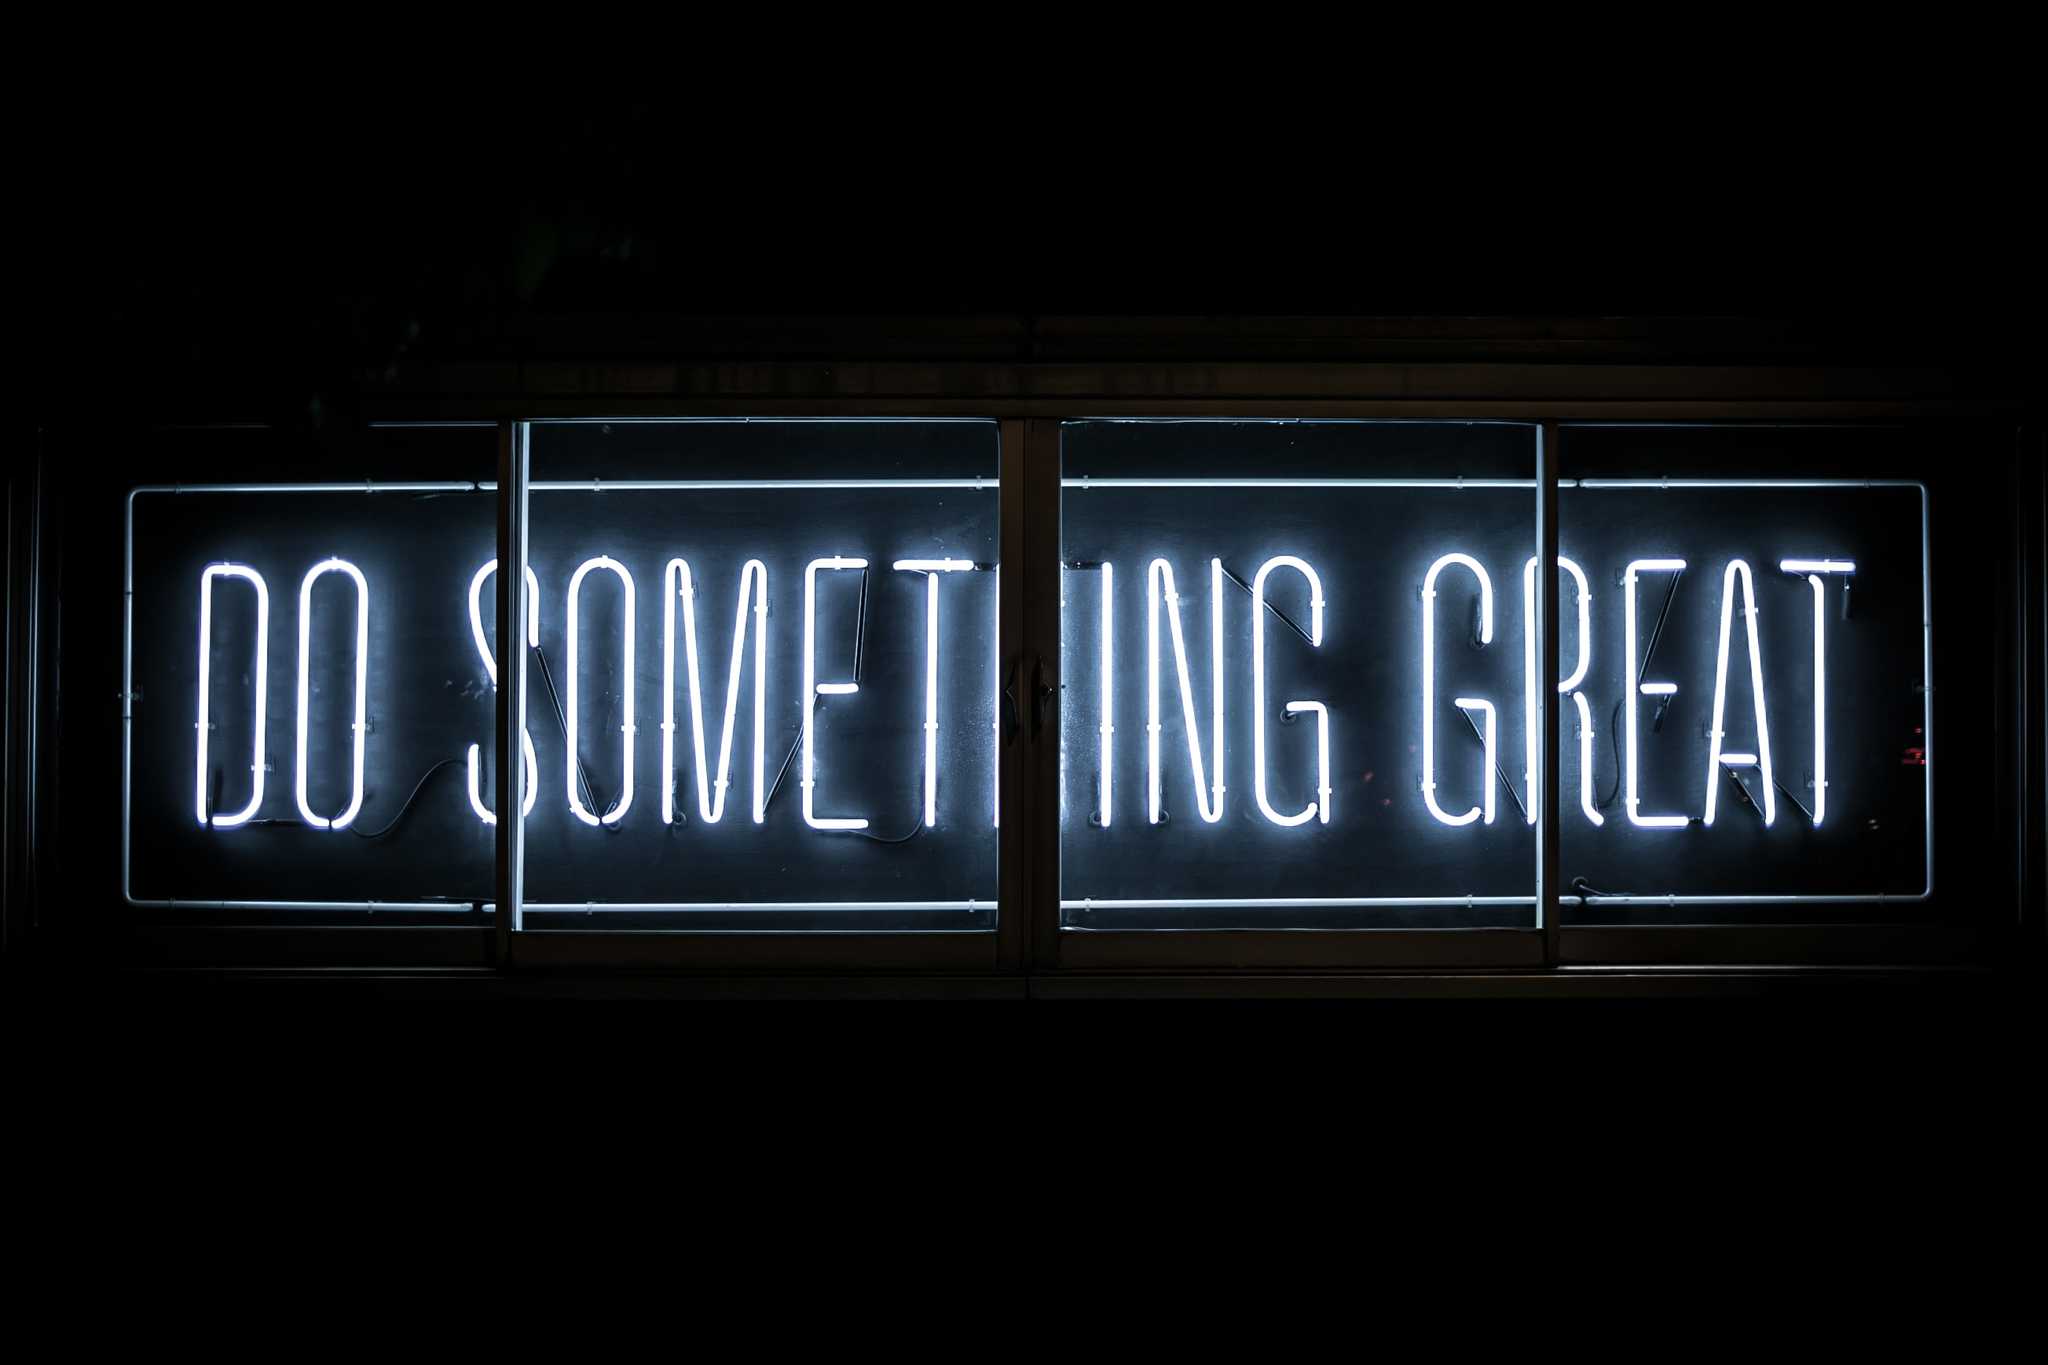 Neon banner saying 'Do something great'